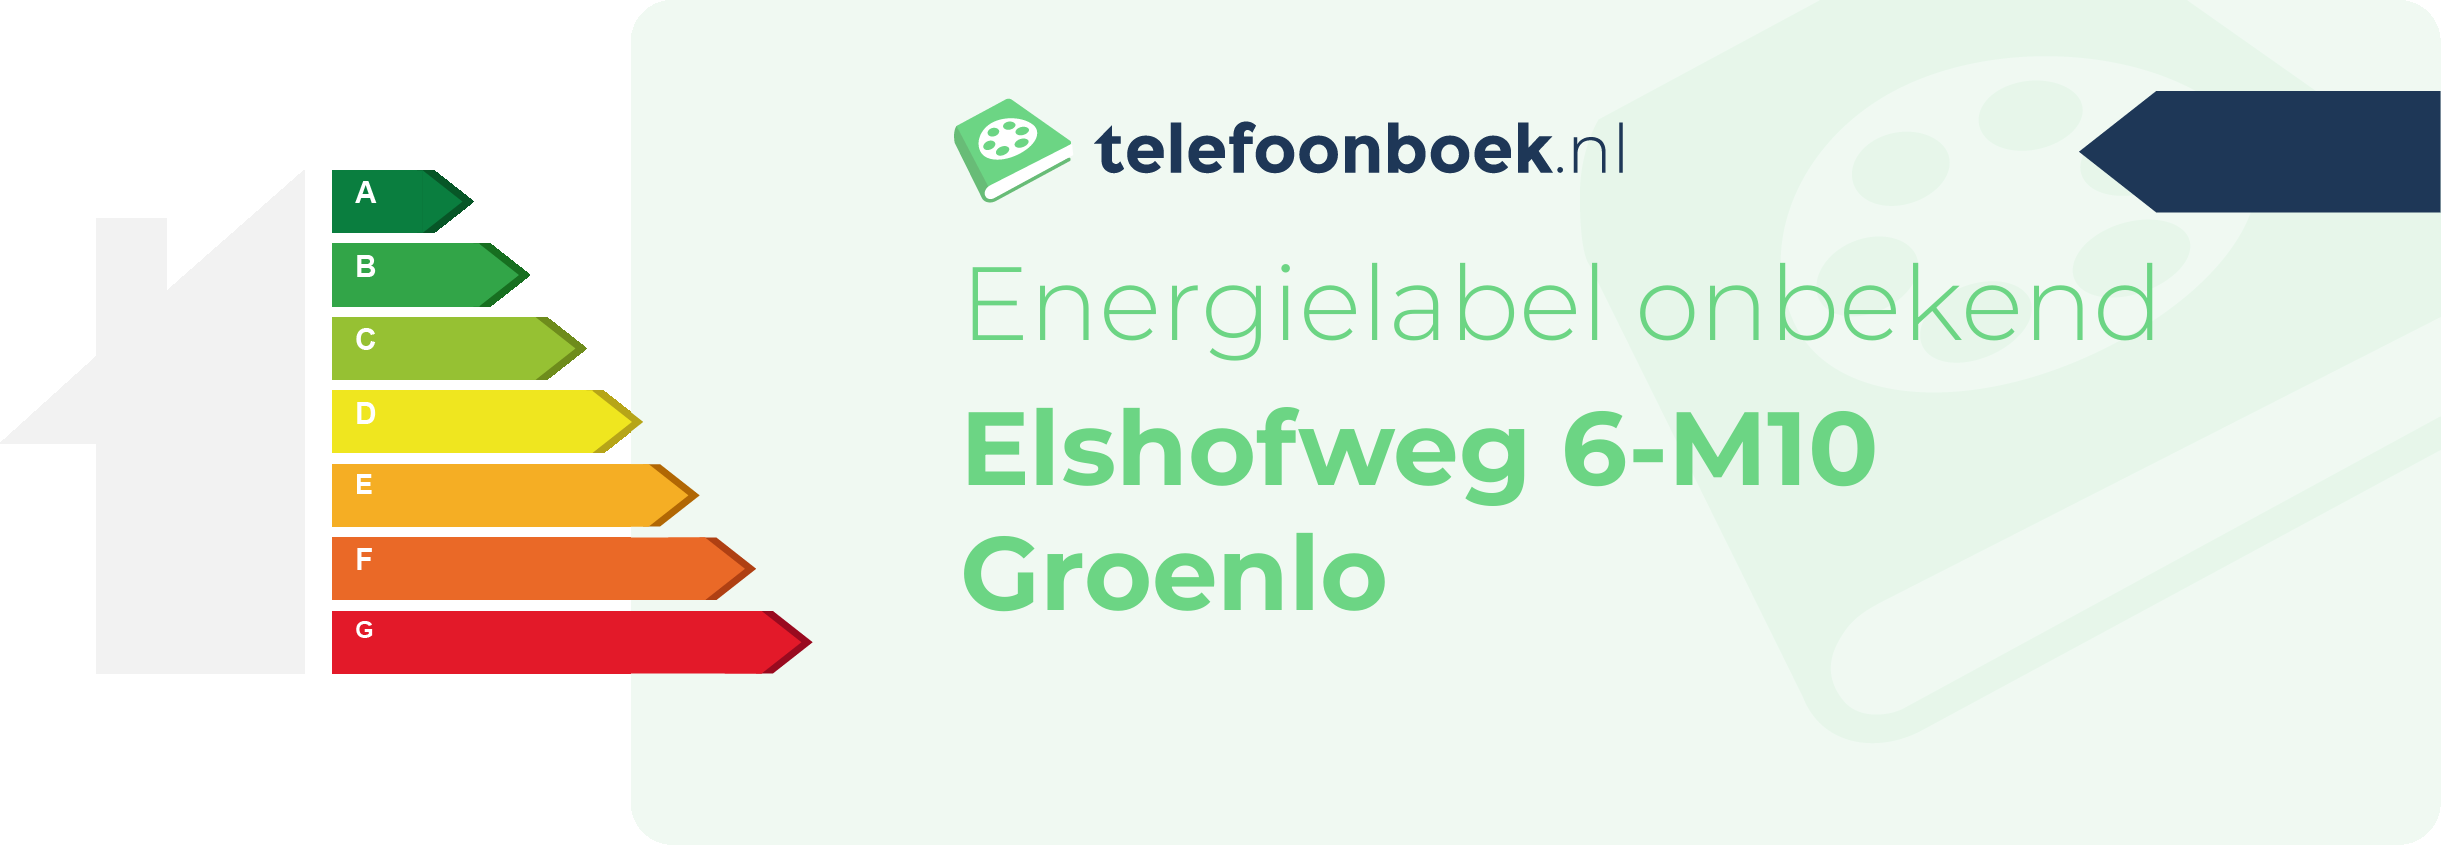 Energielabel Elshofweg 6-M10 Groenlo